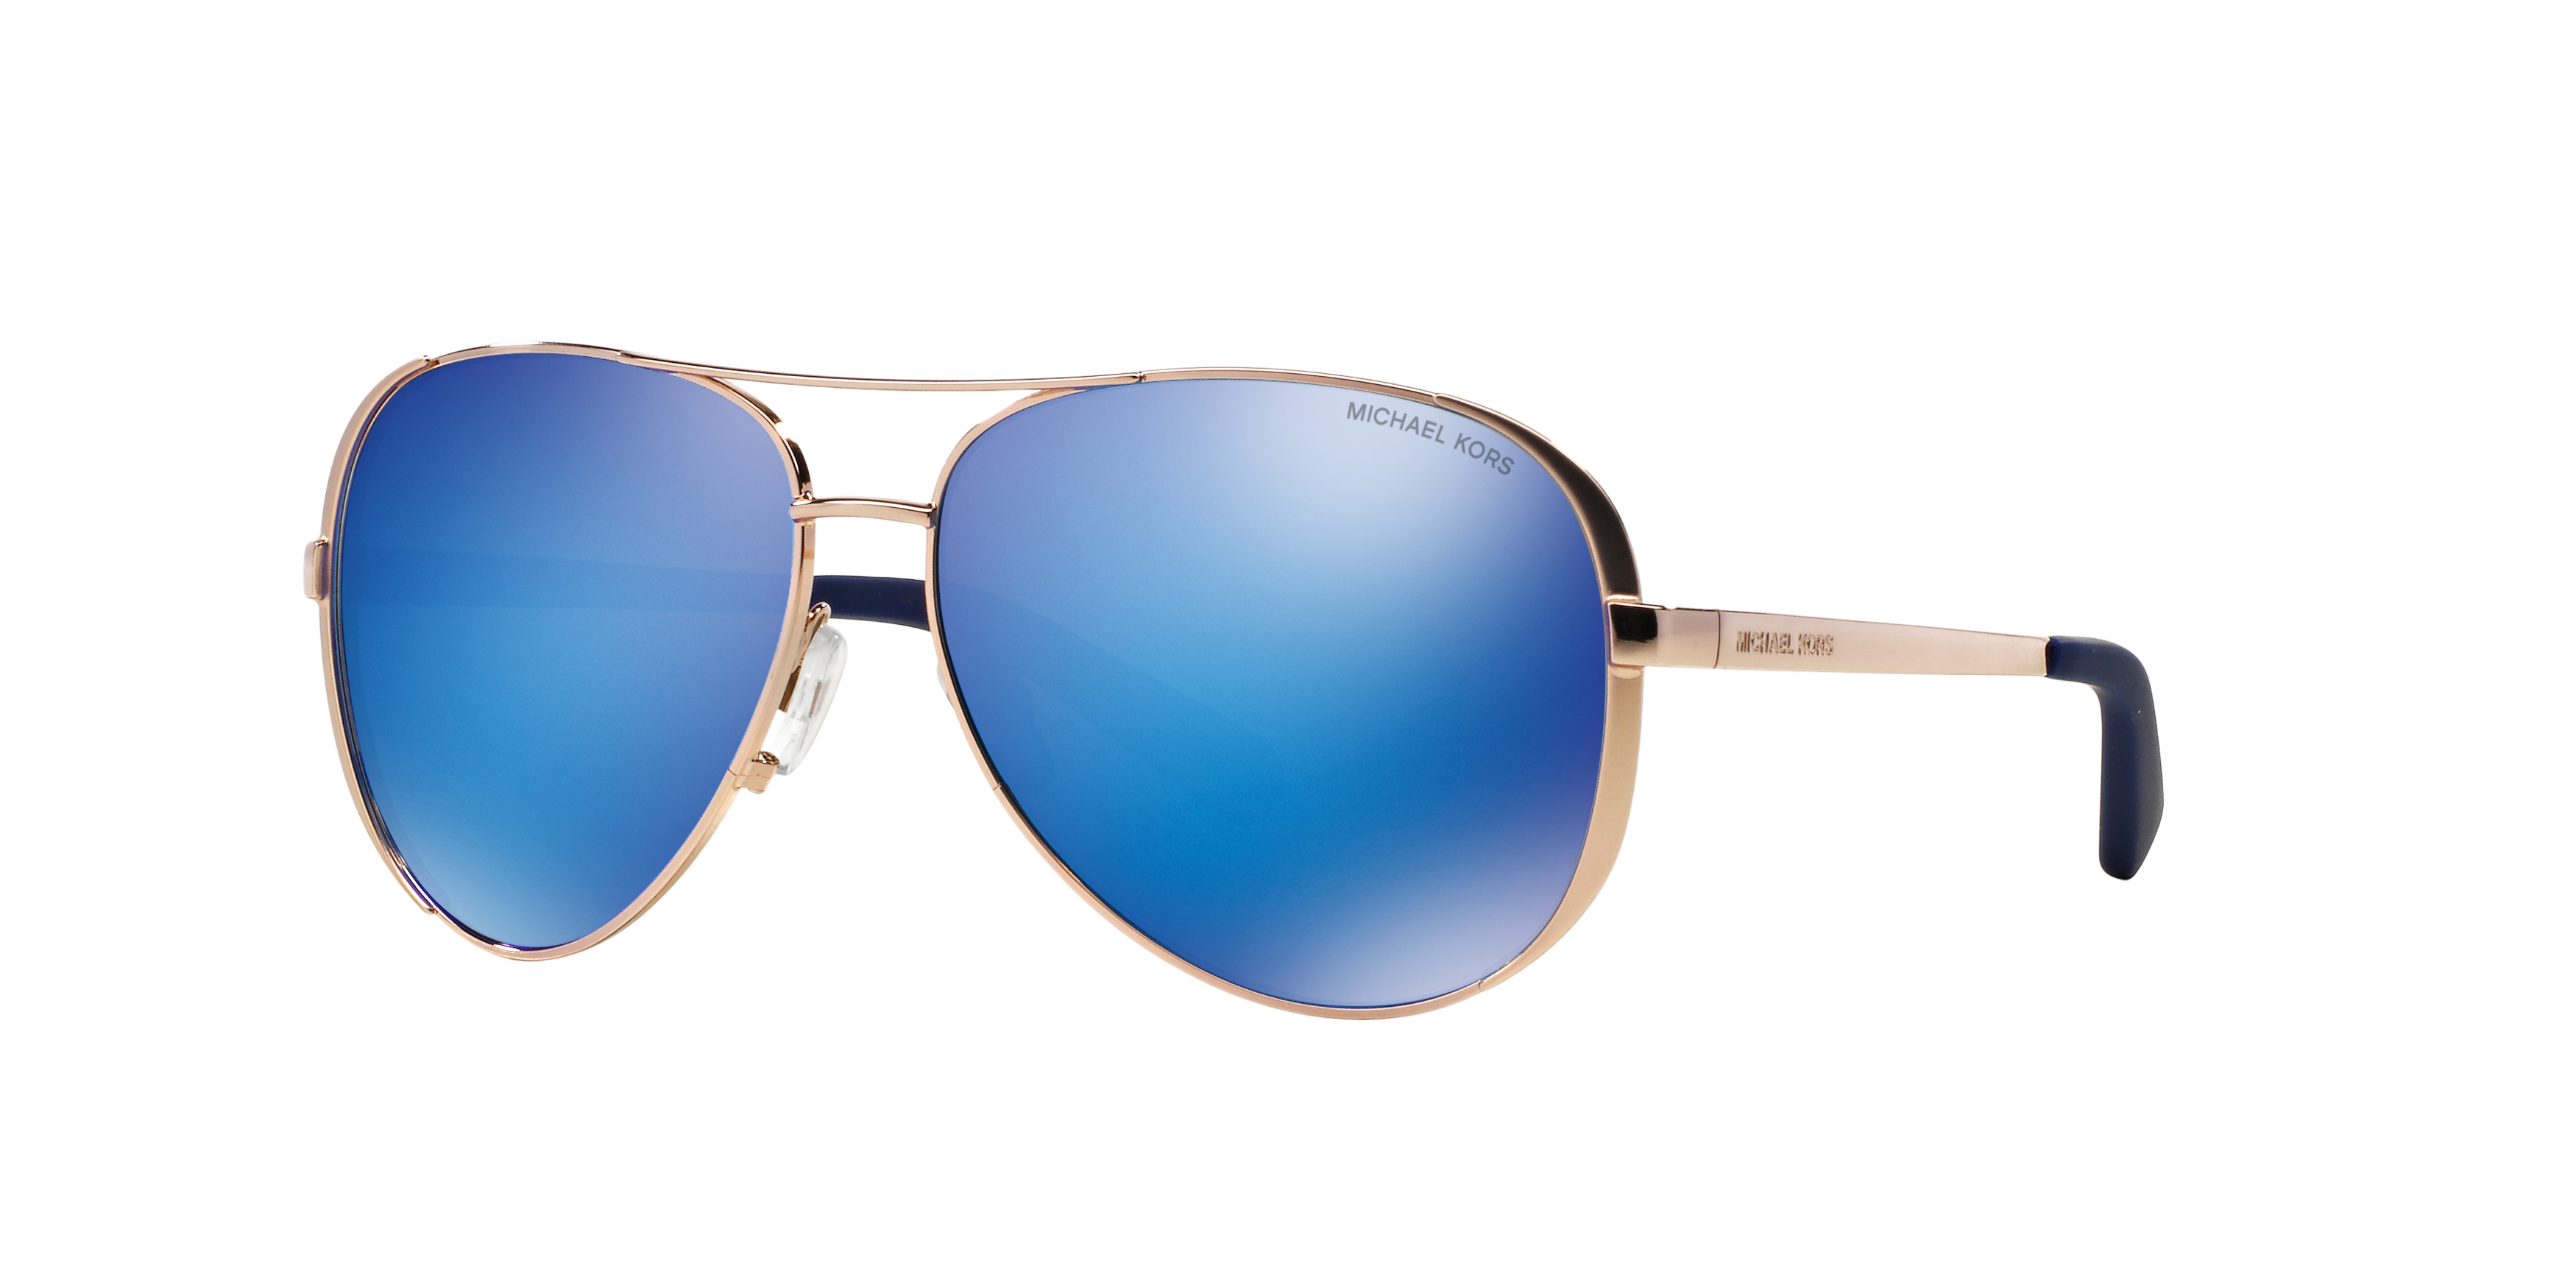 Angle_Left01 Michael Kors MK 5004 Sunglasses Brown / Gold